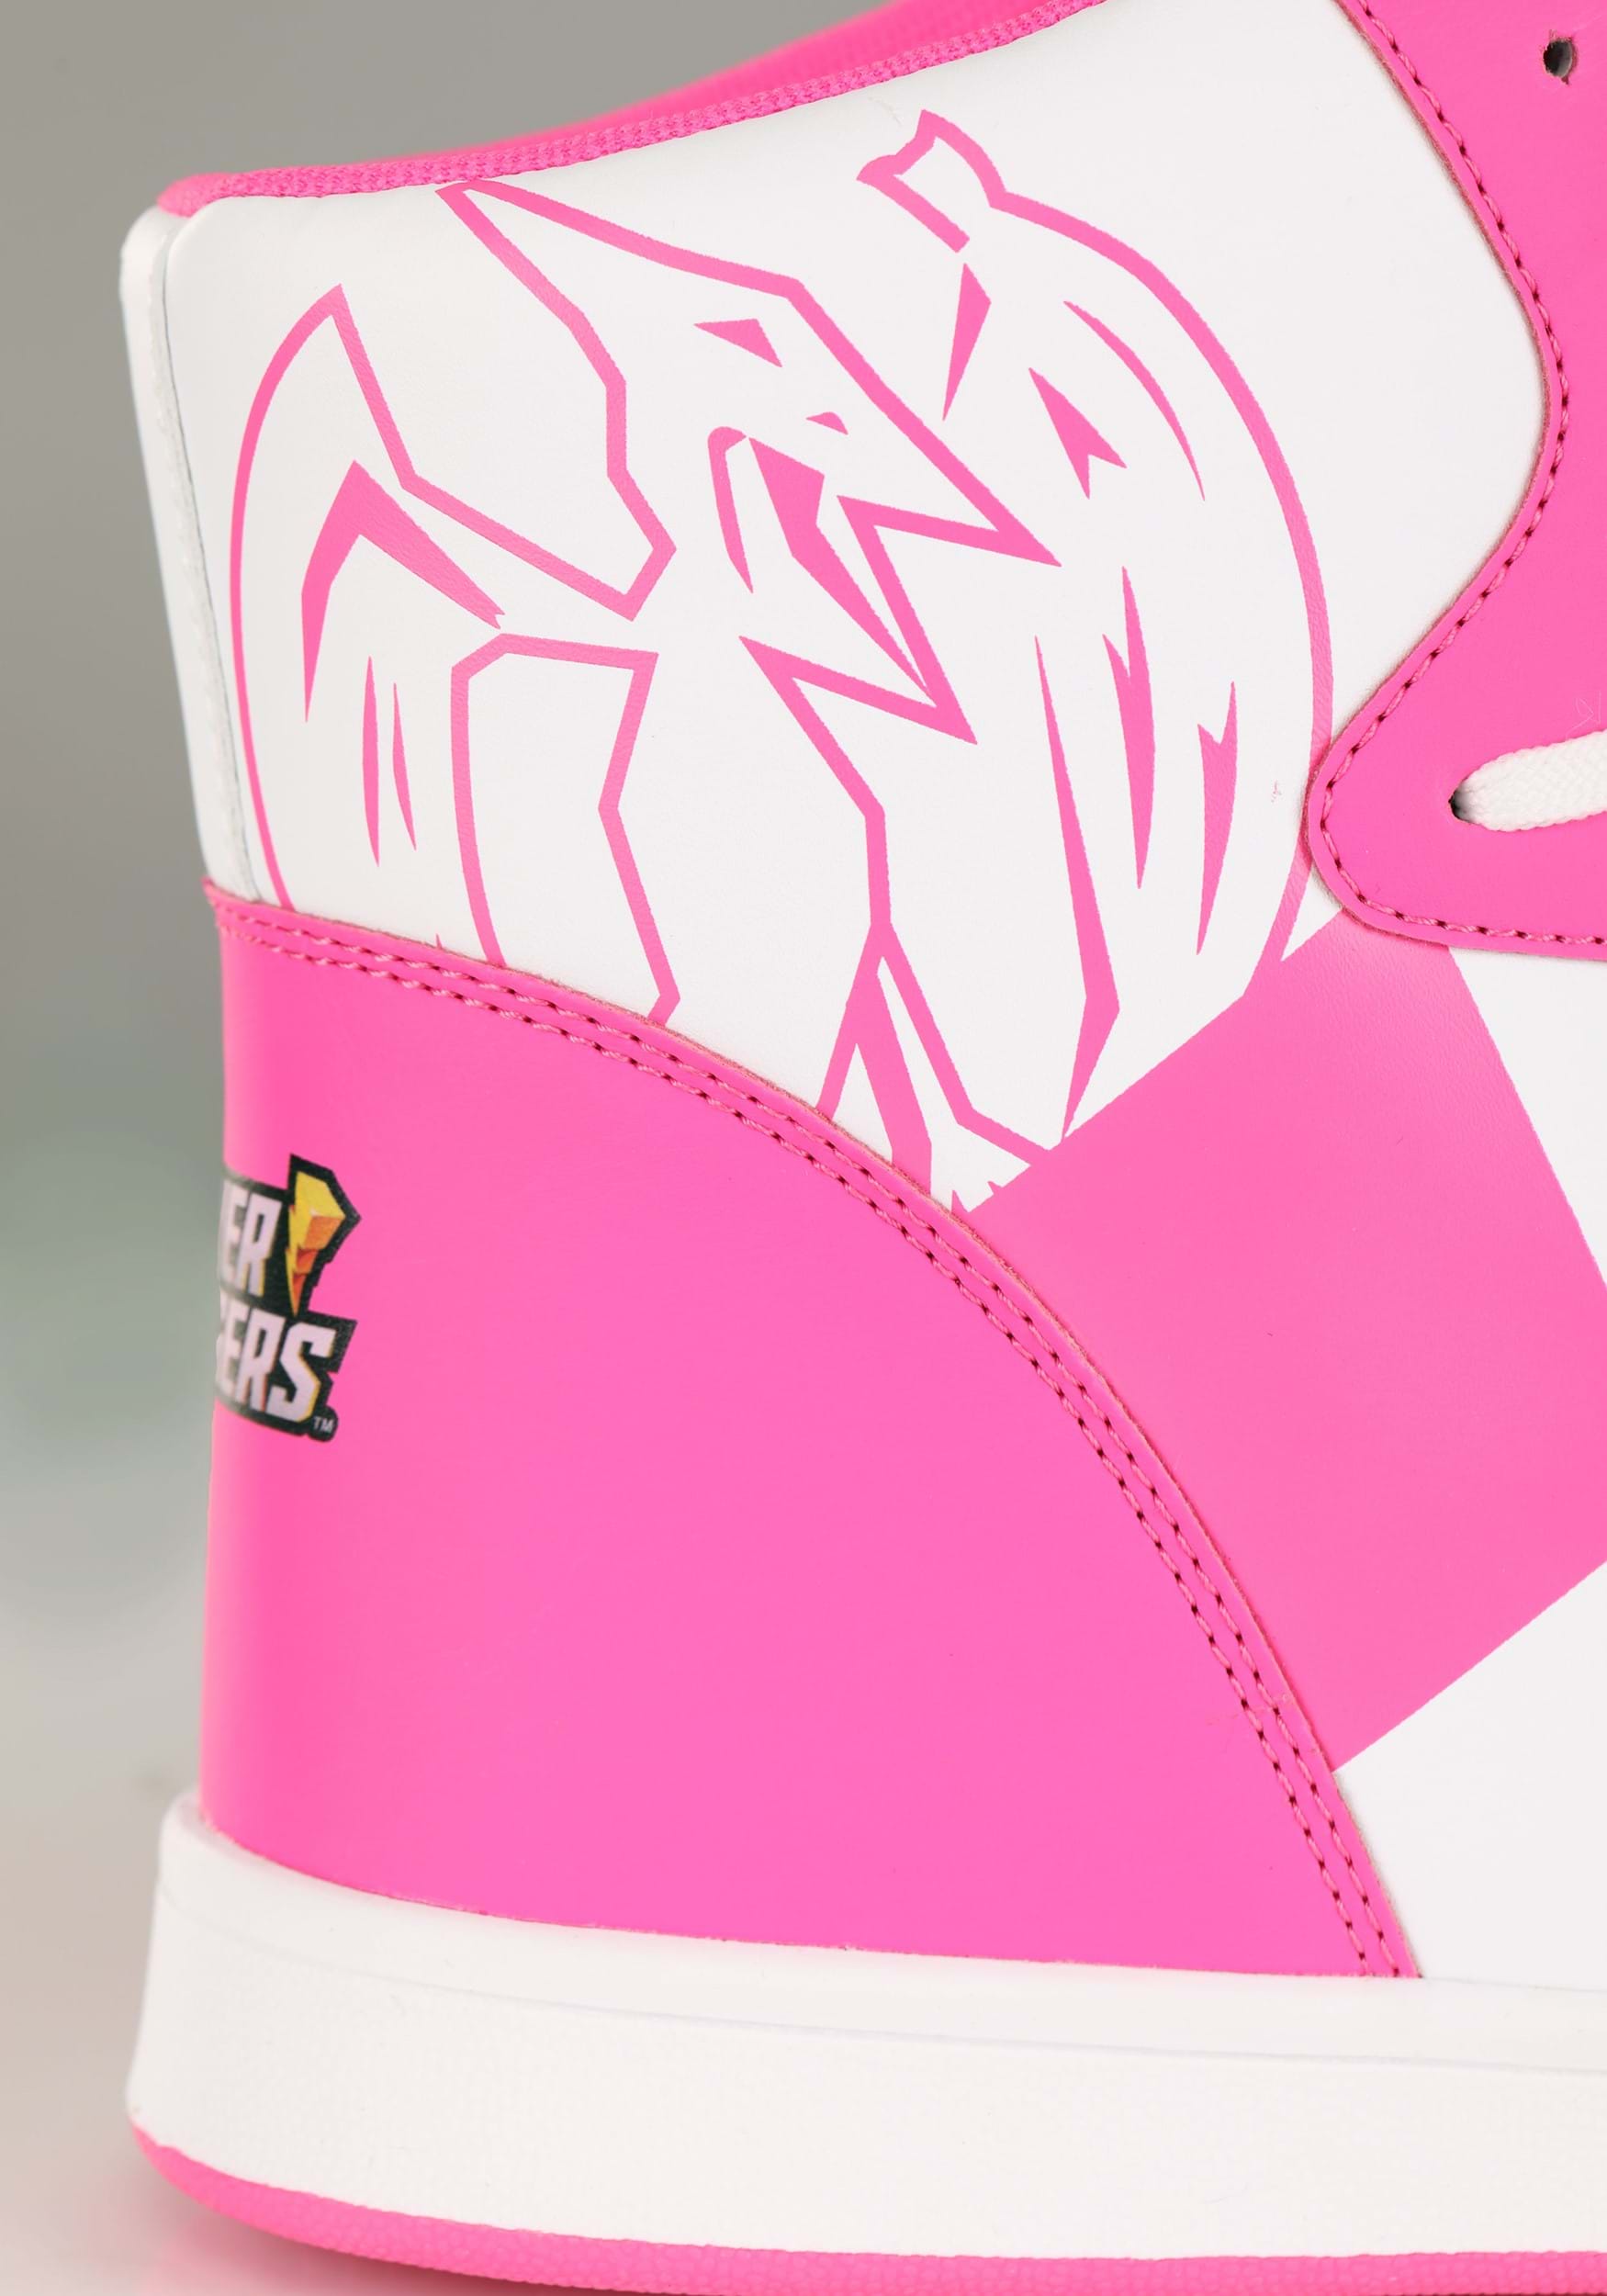 Costume Inspired Power Rangers Pink Sneakers